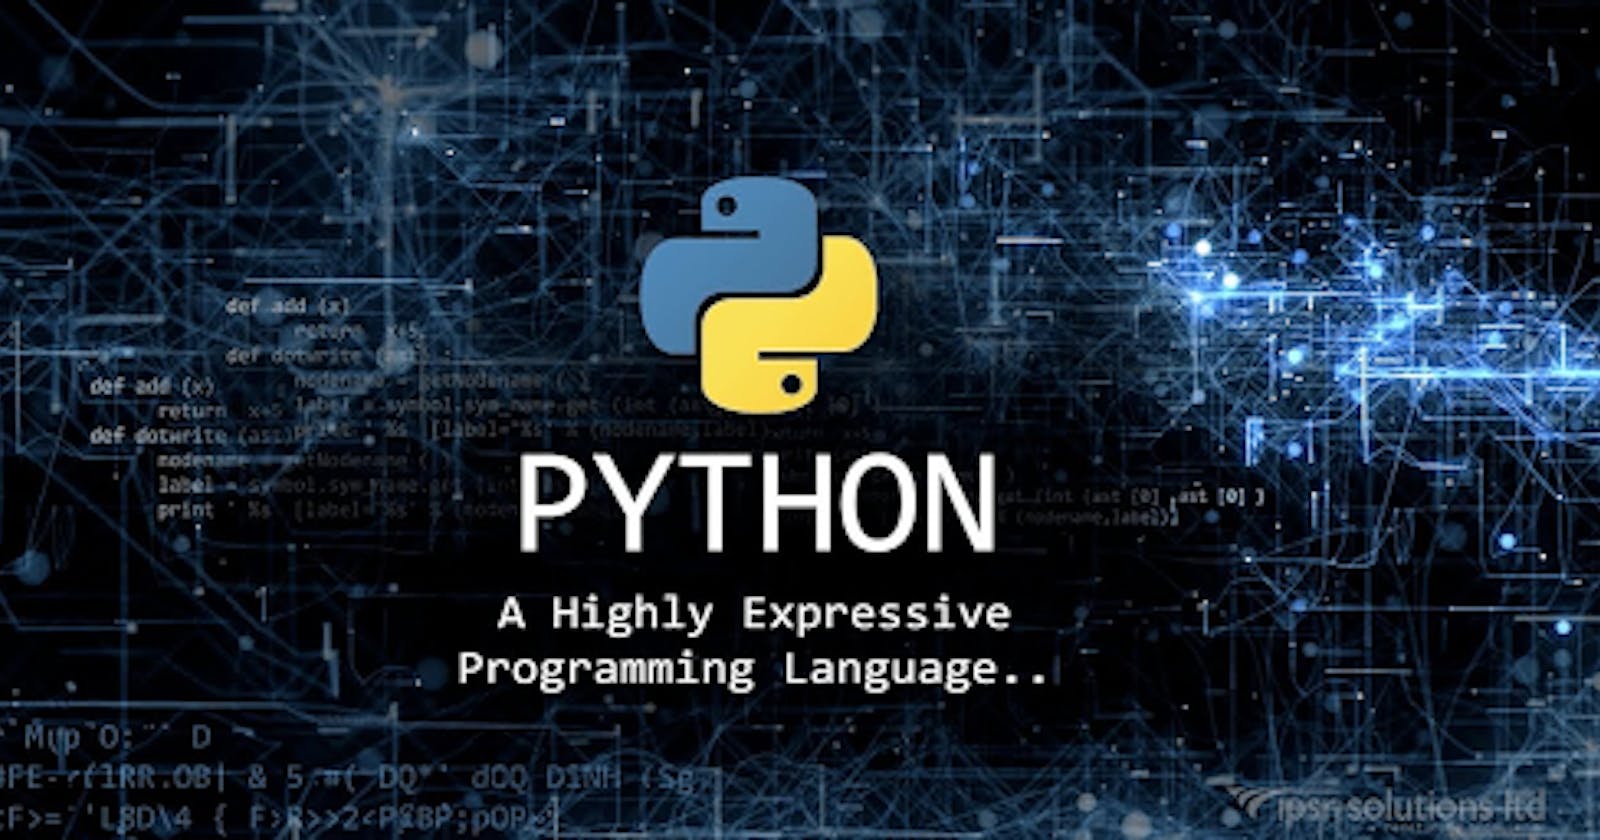 How to install Python on Windows 10, and print "Hello world" on the Python shell.